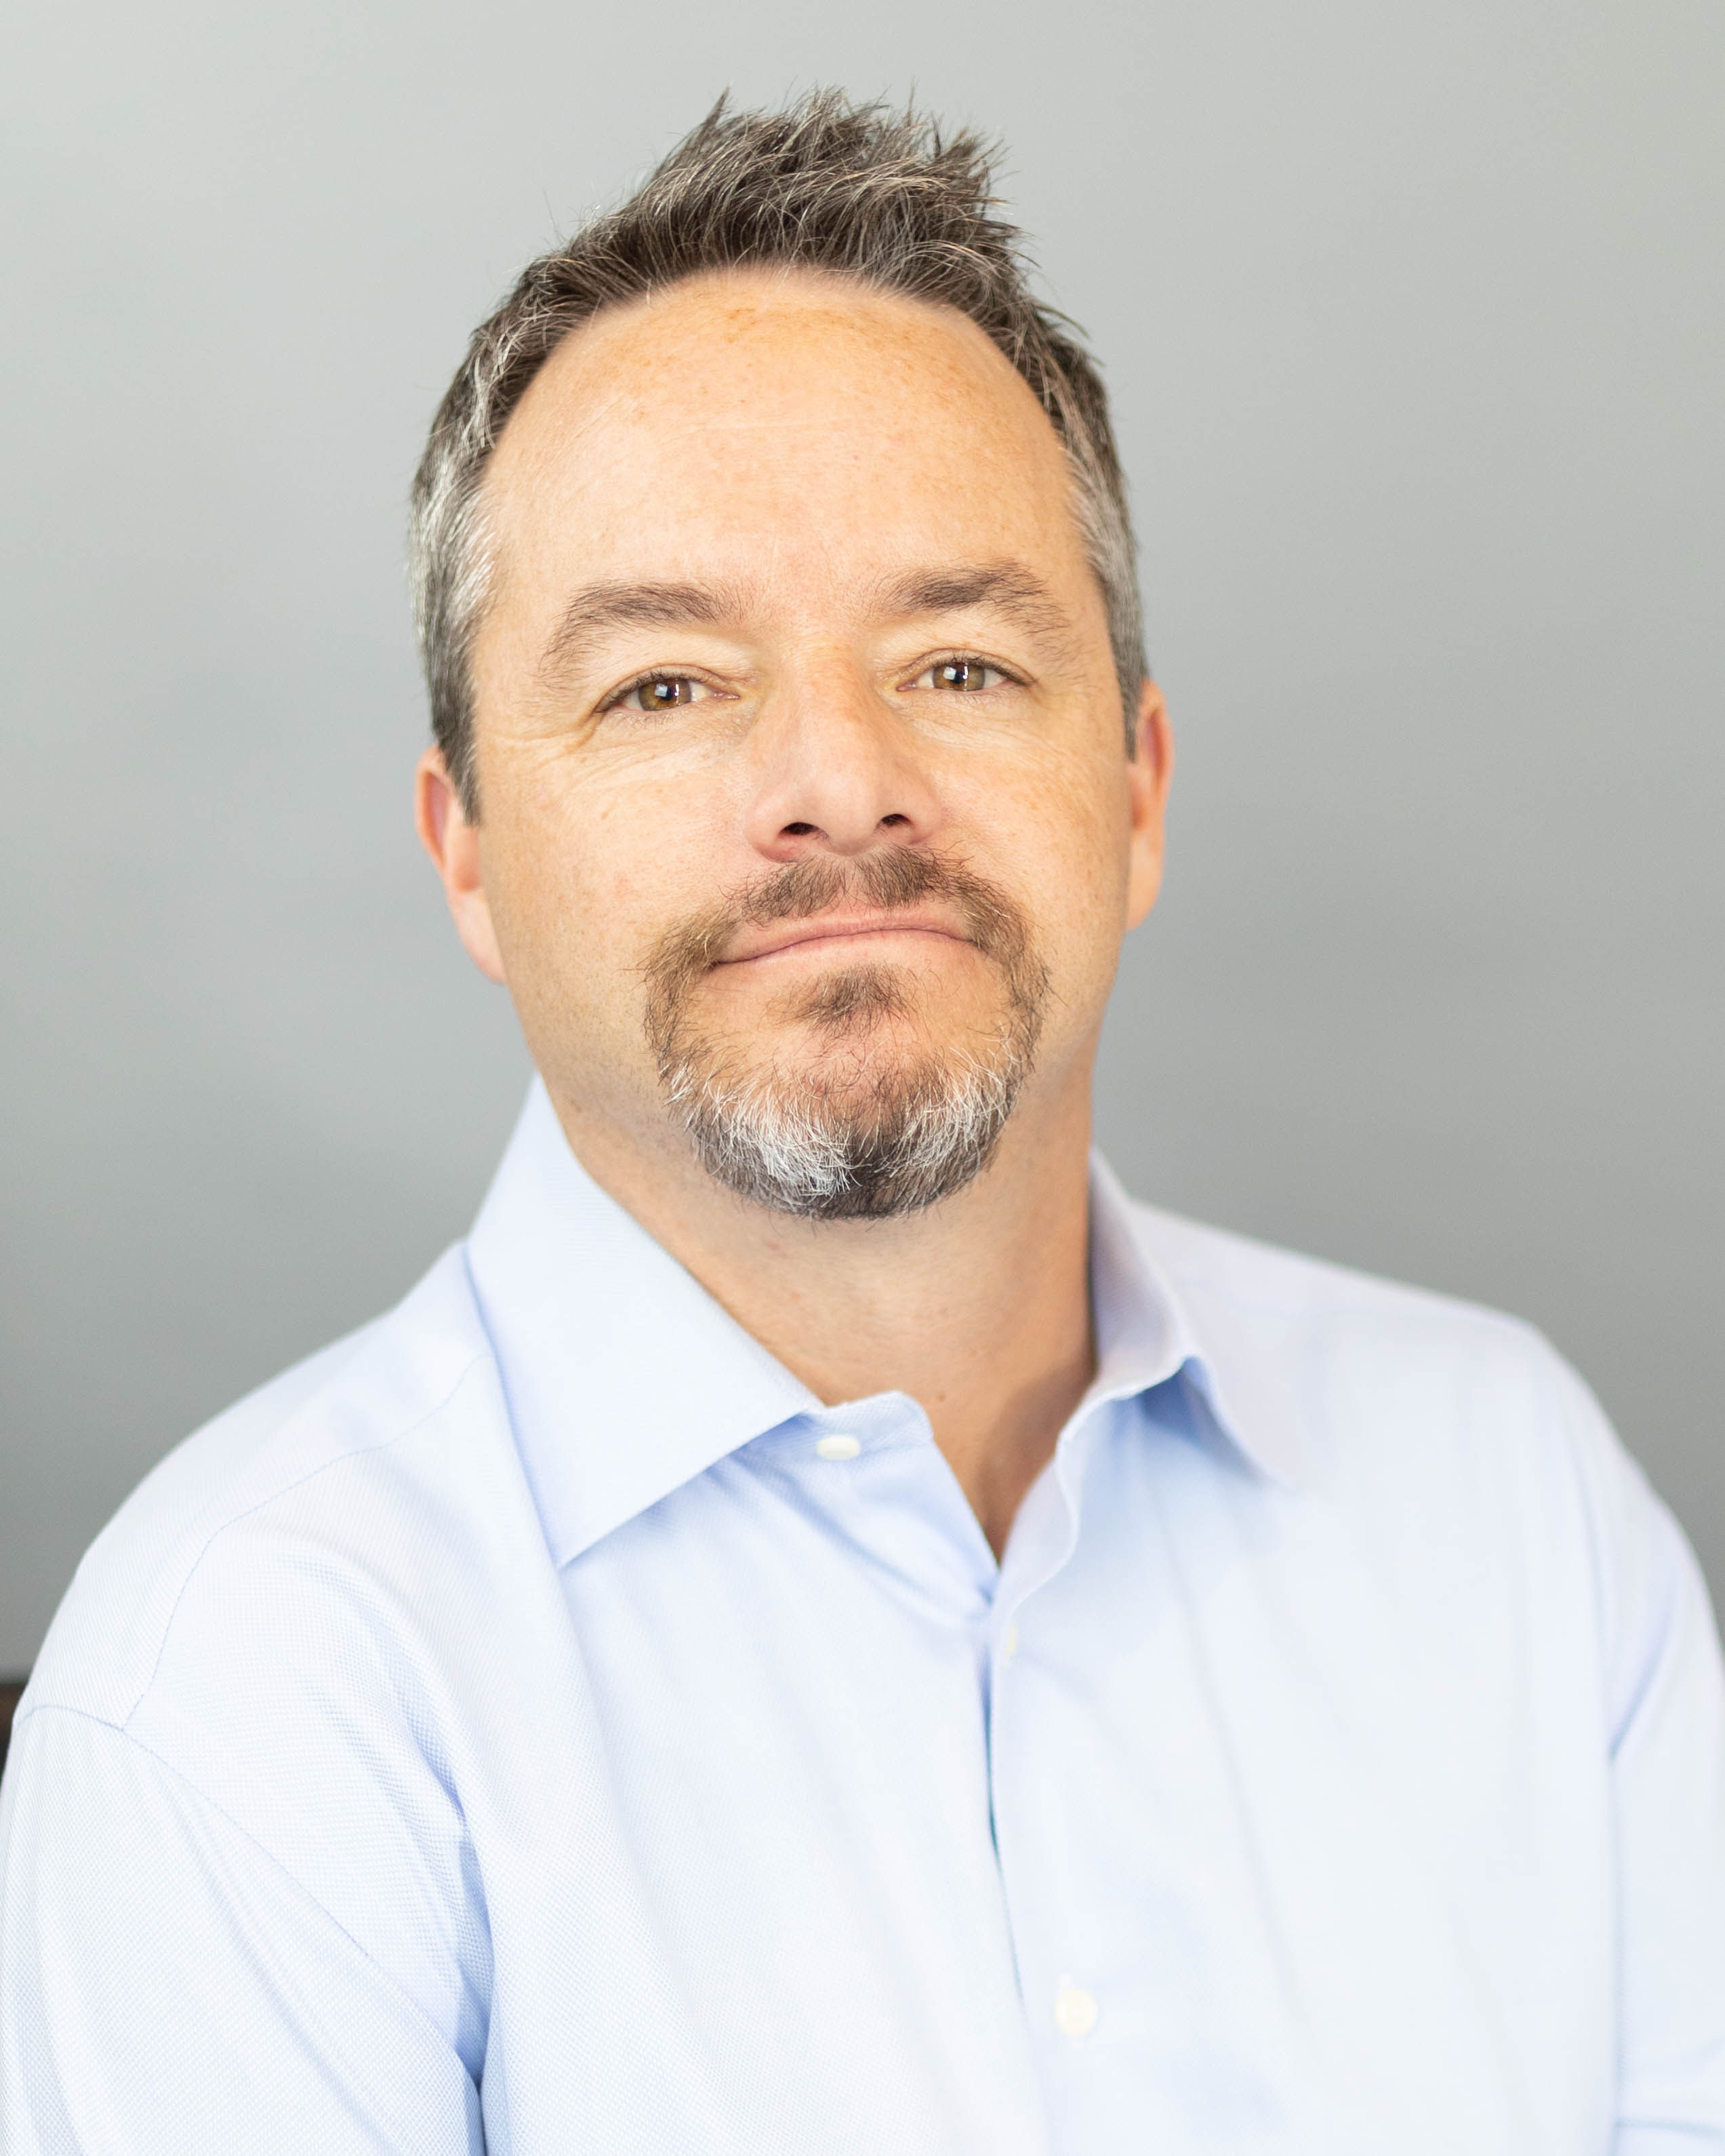 Dan Sogorka, chief executive officer of Sagent Lending Technologies